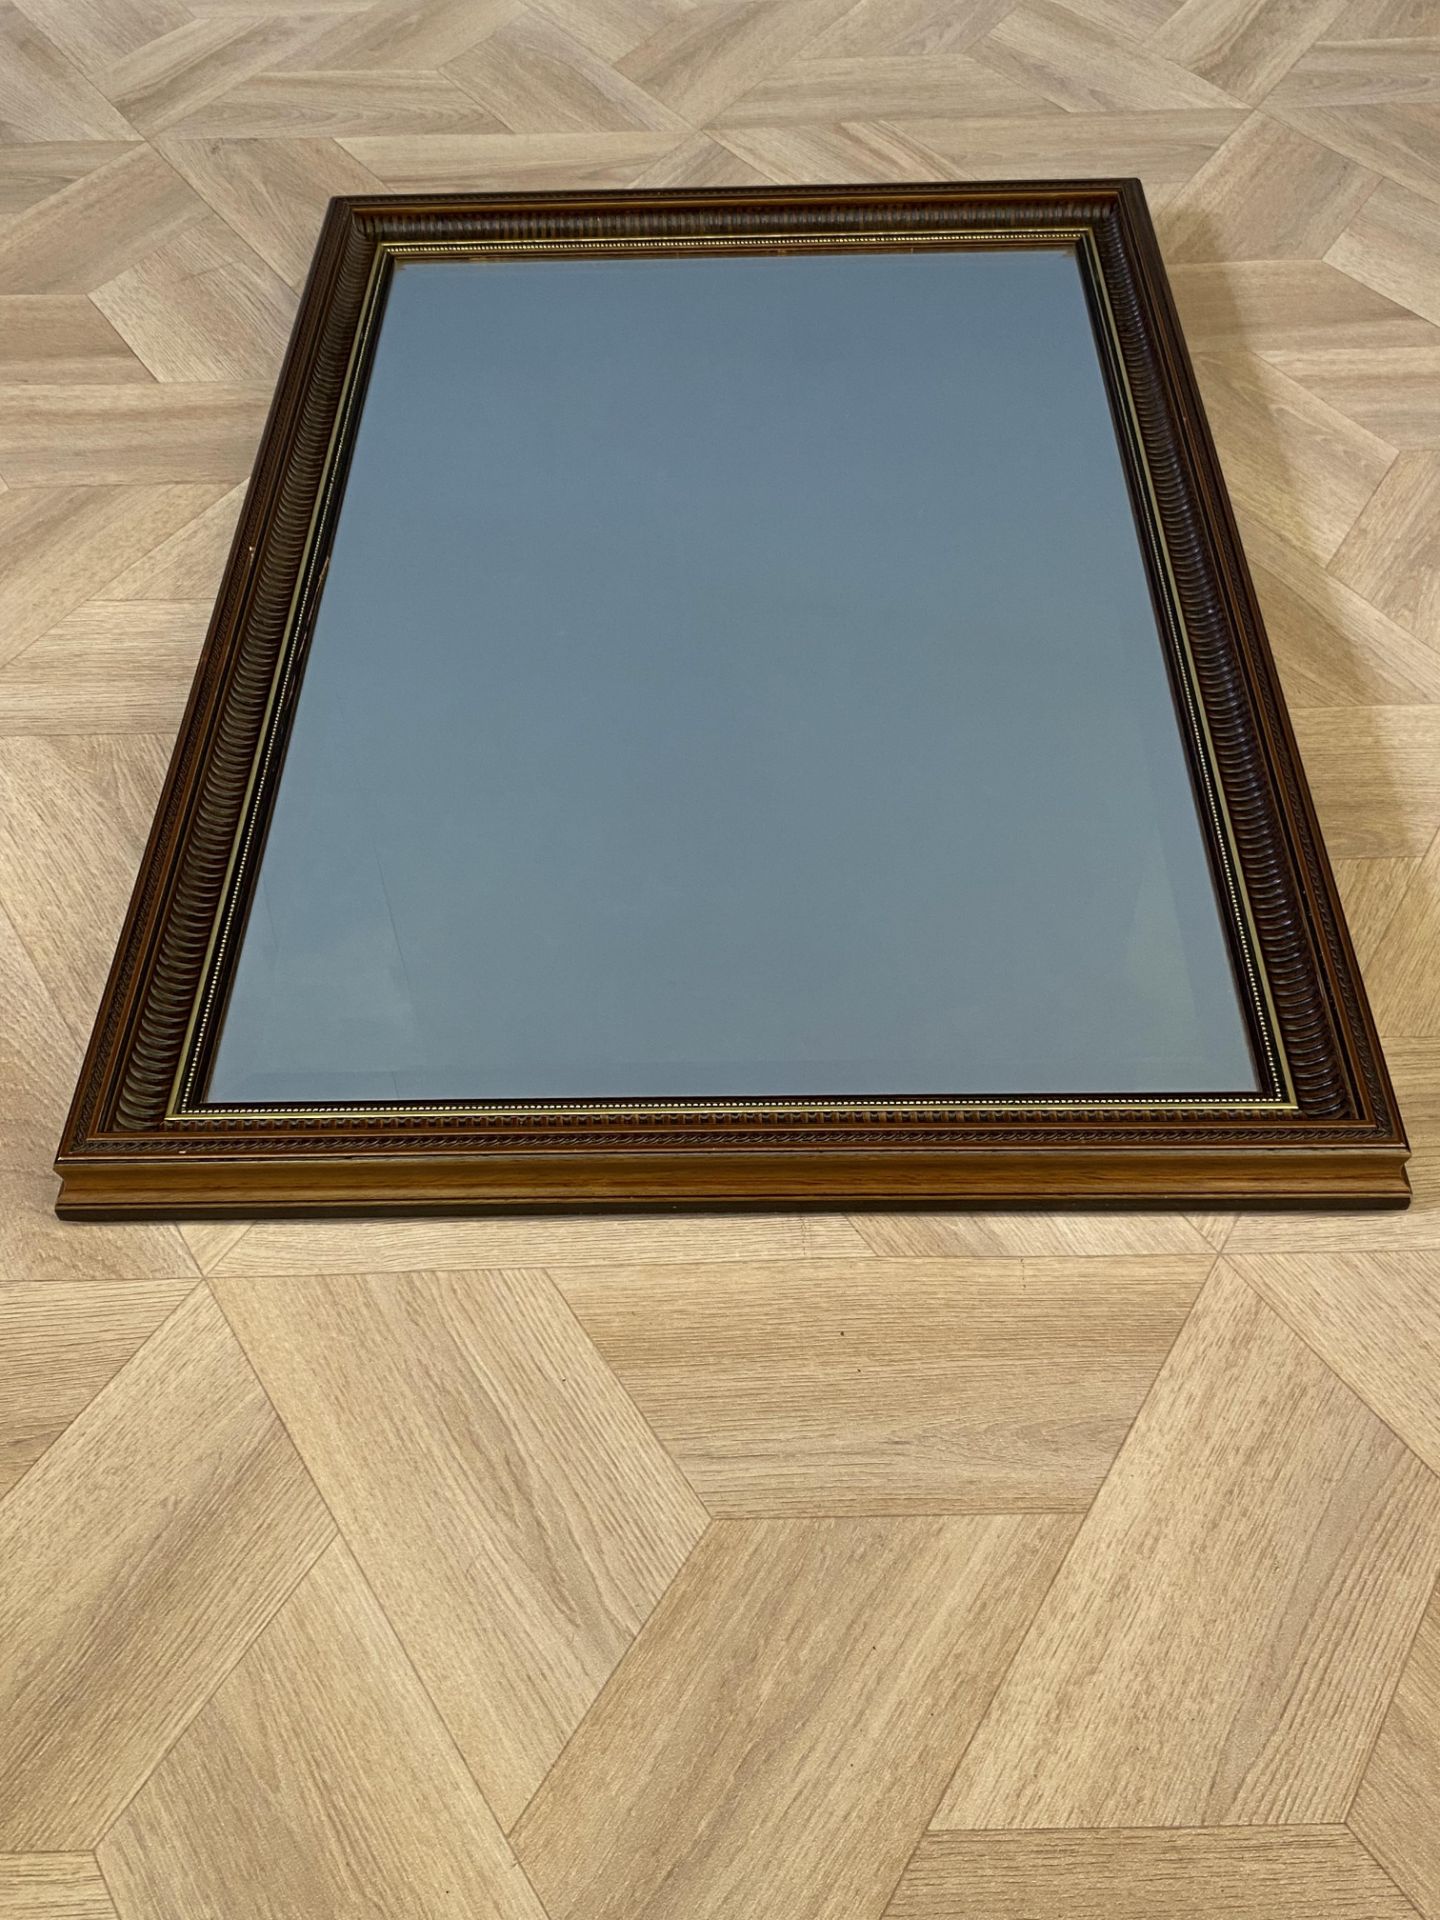 Antique style walnut mirror - Image 2 of 6